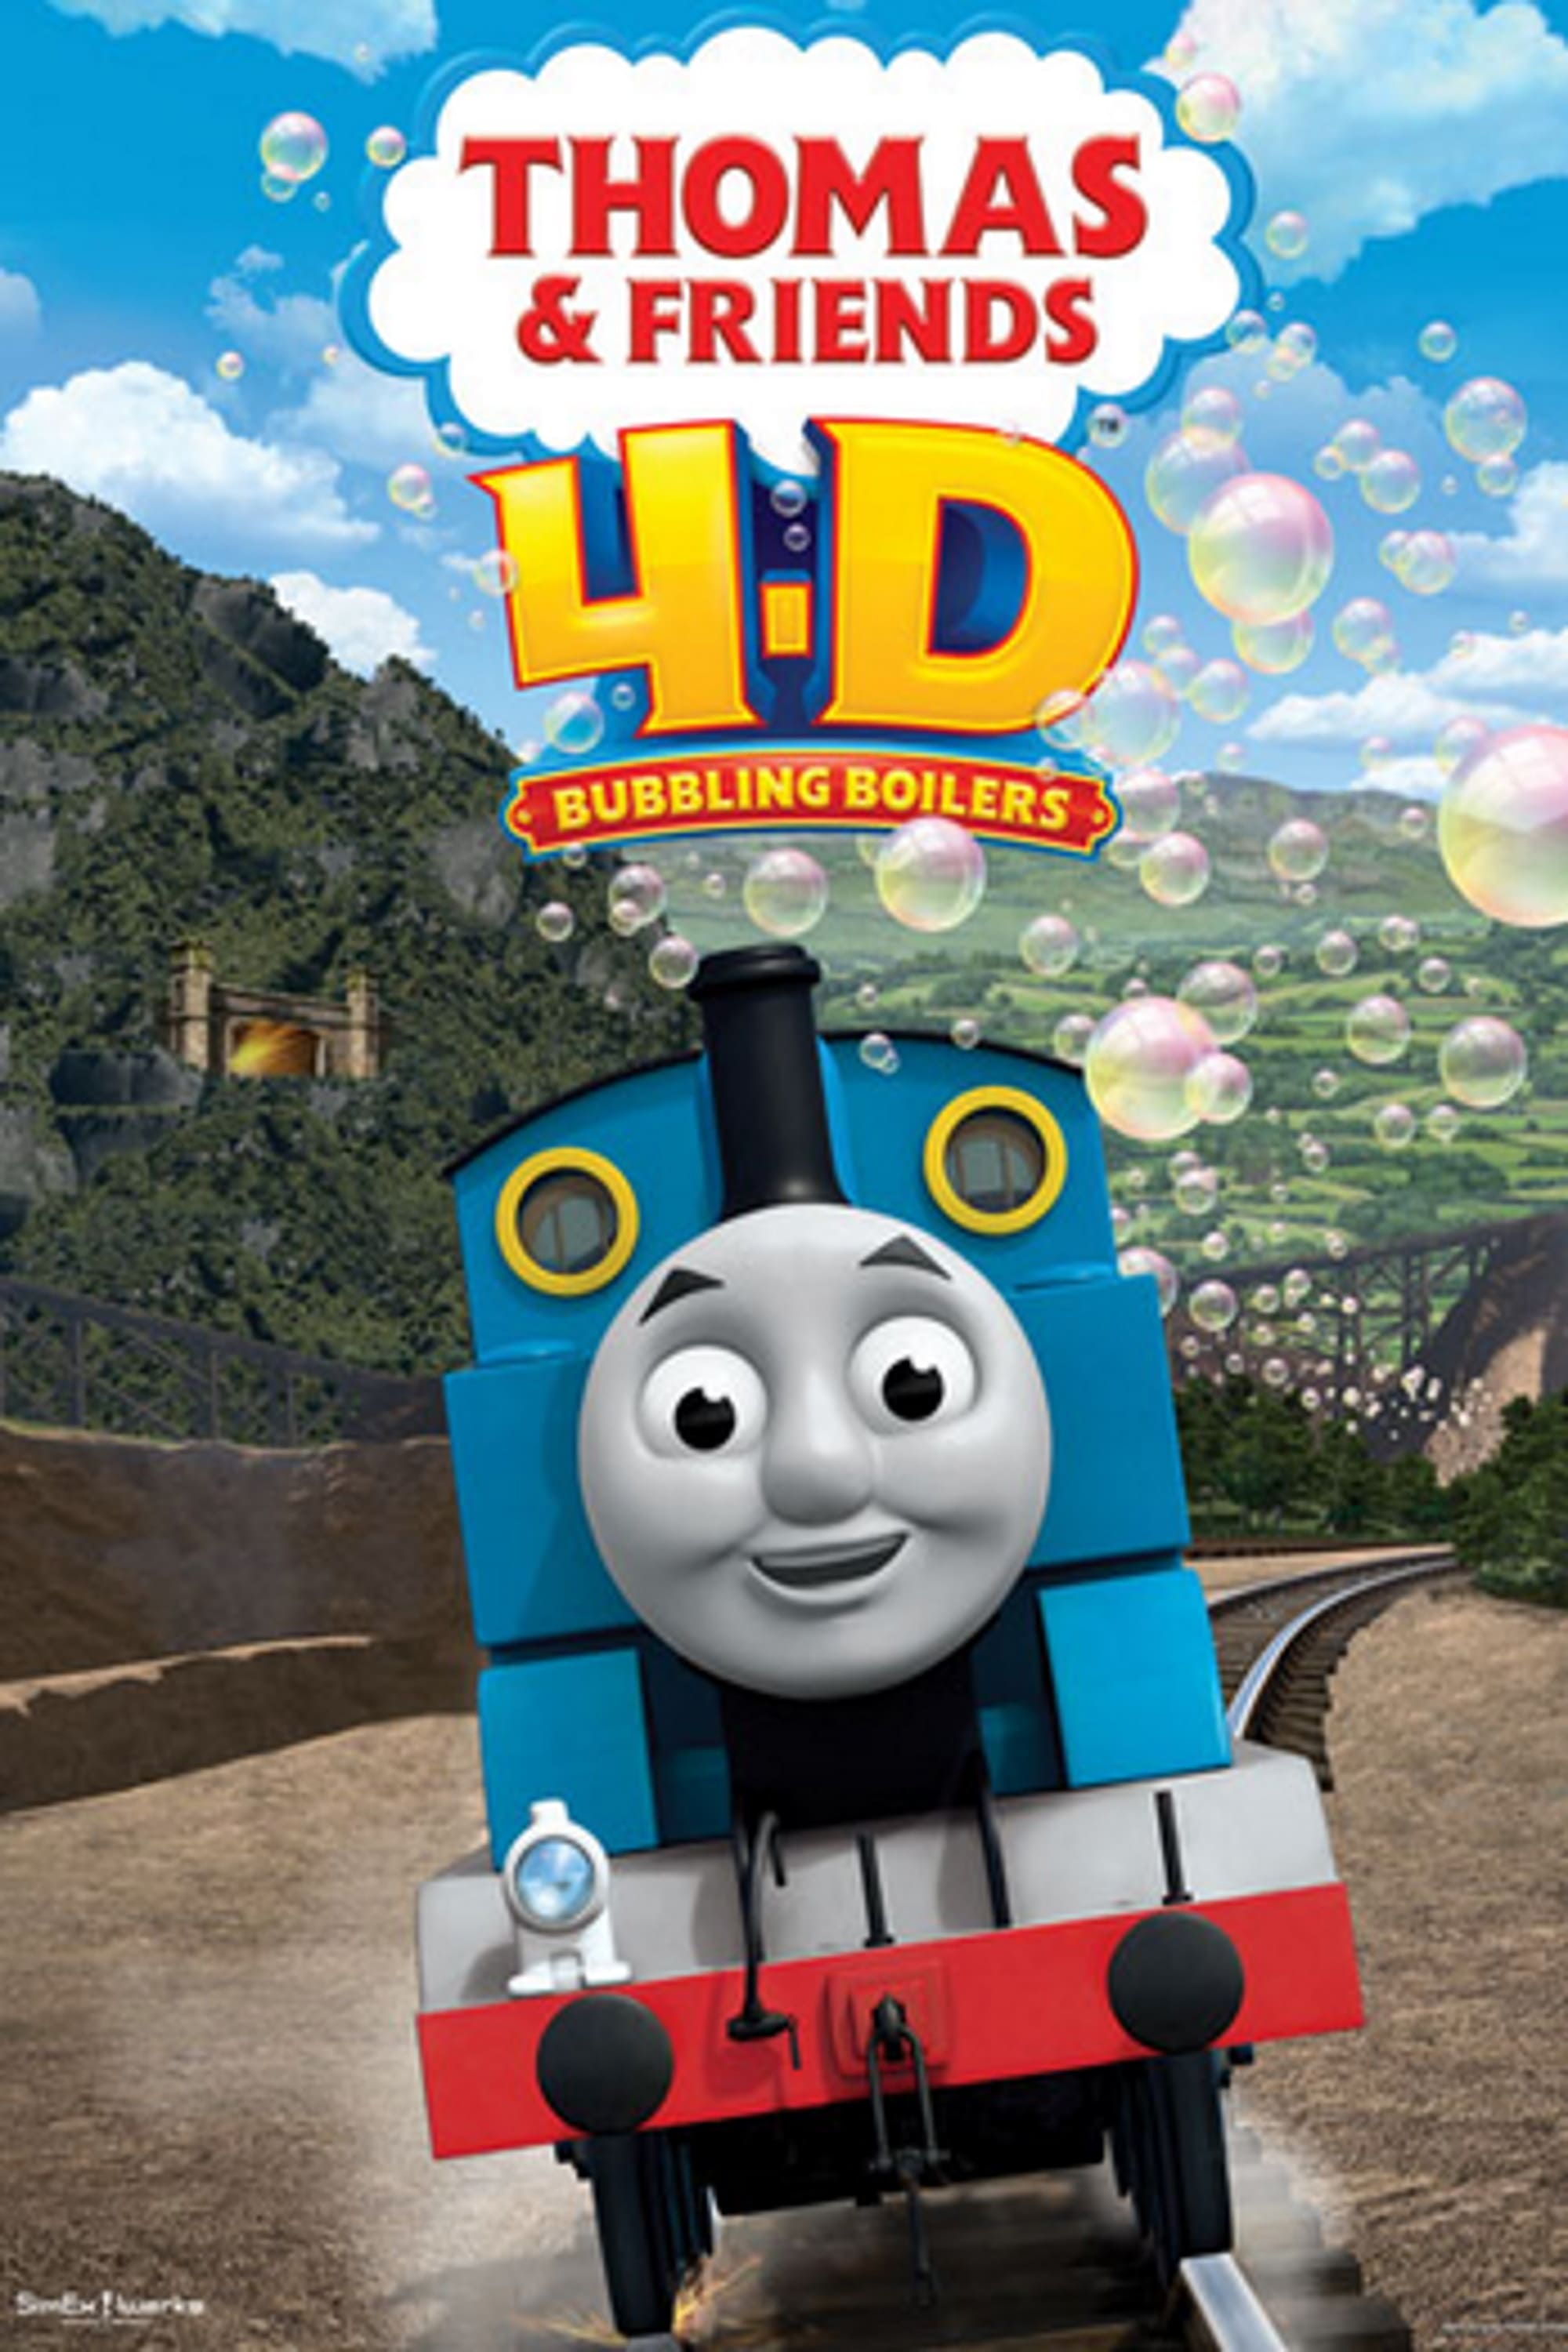 Thomas & Friends in 4-D film